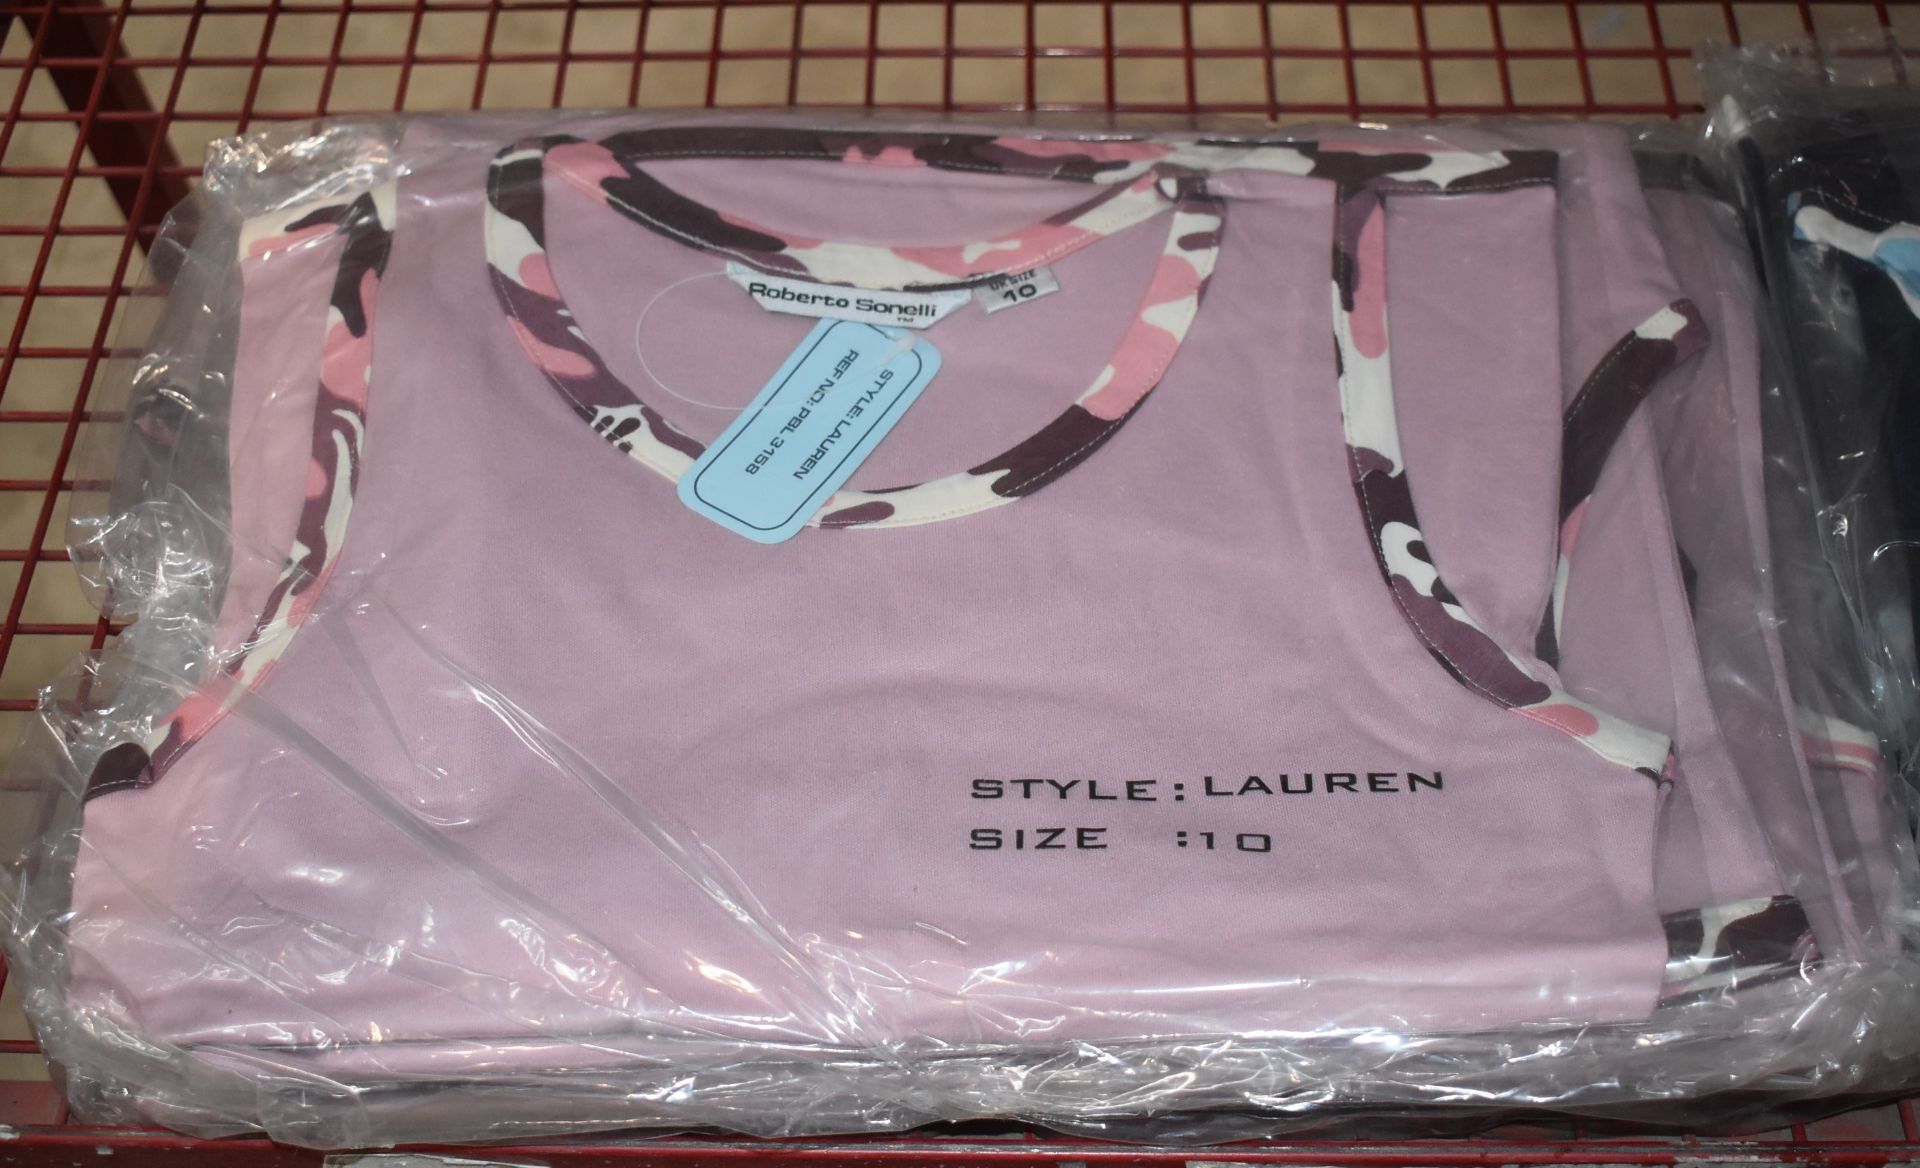 12 x Roberto Sonelli 'Lauren' Ladies Sleeveless Vests - Mauve/ Camouflage - New - Approx RRP £180 - Image 2 of 4